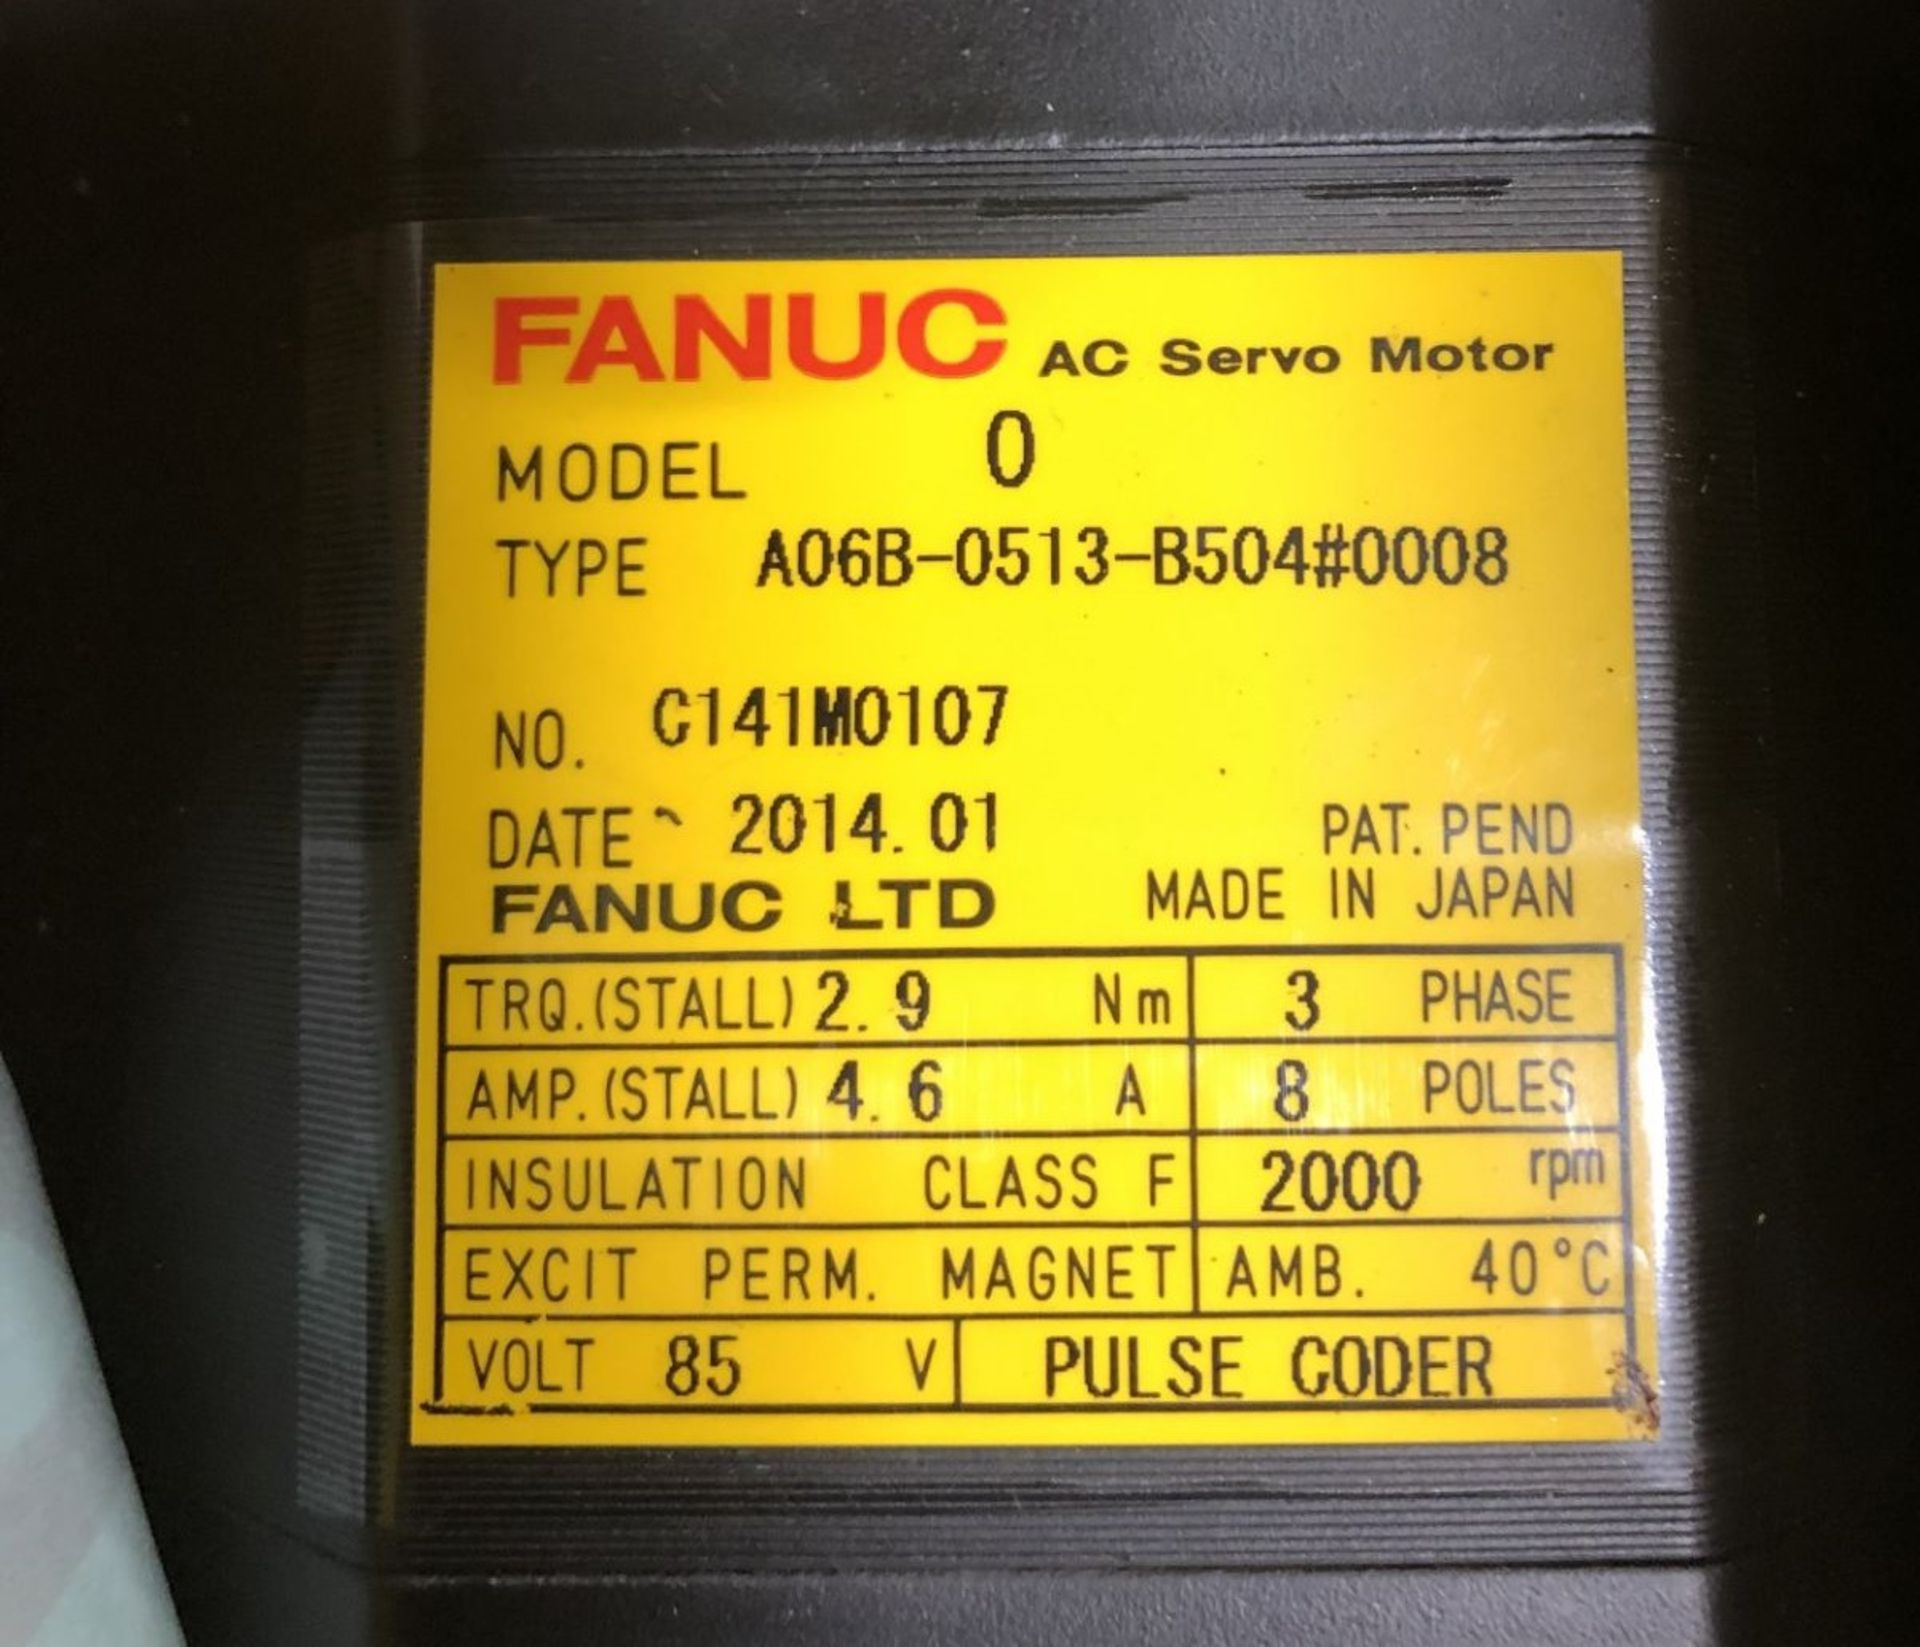 NEW IN BOX Fanuc AC Servo Motor, A06B-0513-B504 #0008 - Image 5 of 5